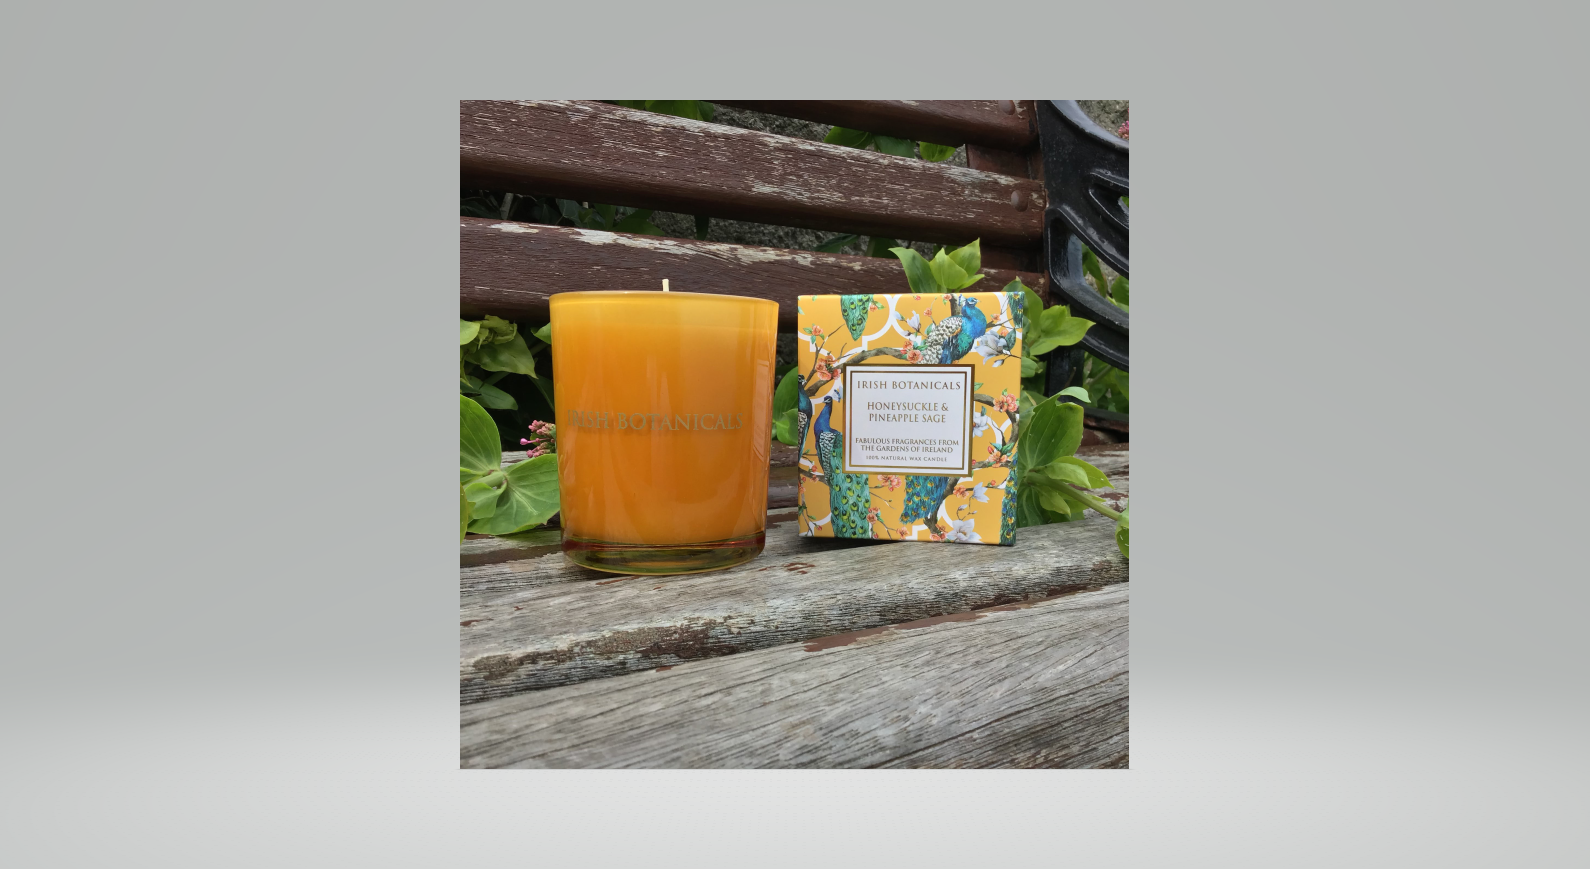 Irish Botanicals Honeysuckle and Pineapple Sage Candle